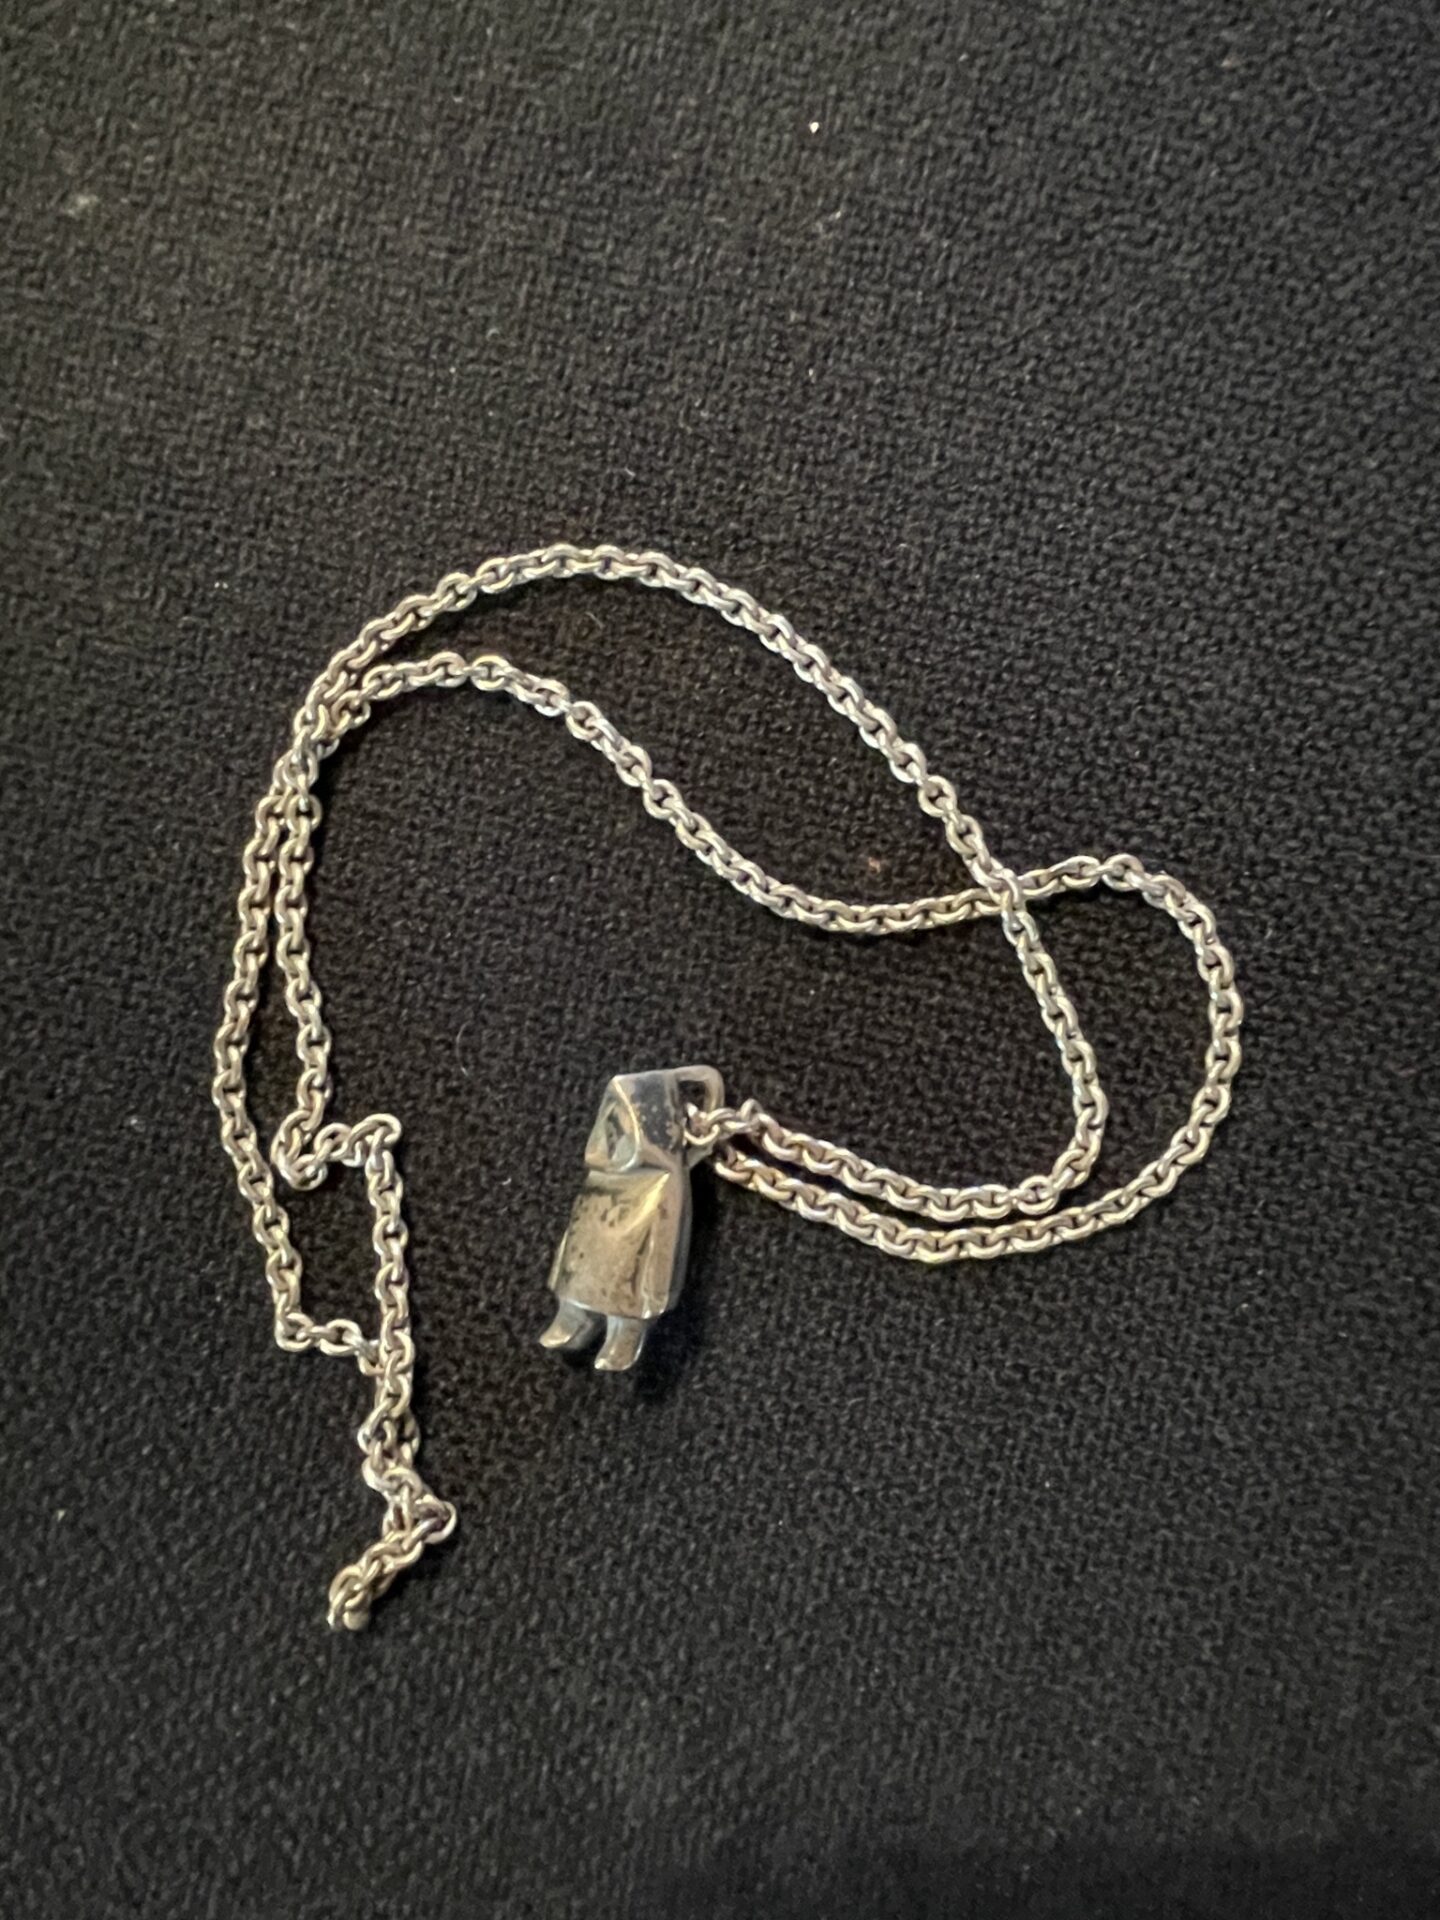 Thulemanden, (3,5cm), med kæde (60 cm), Sterling sølv. Pris 1000kr 